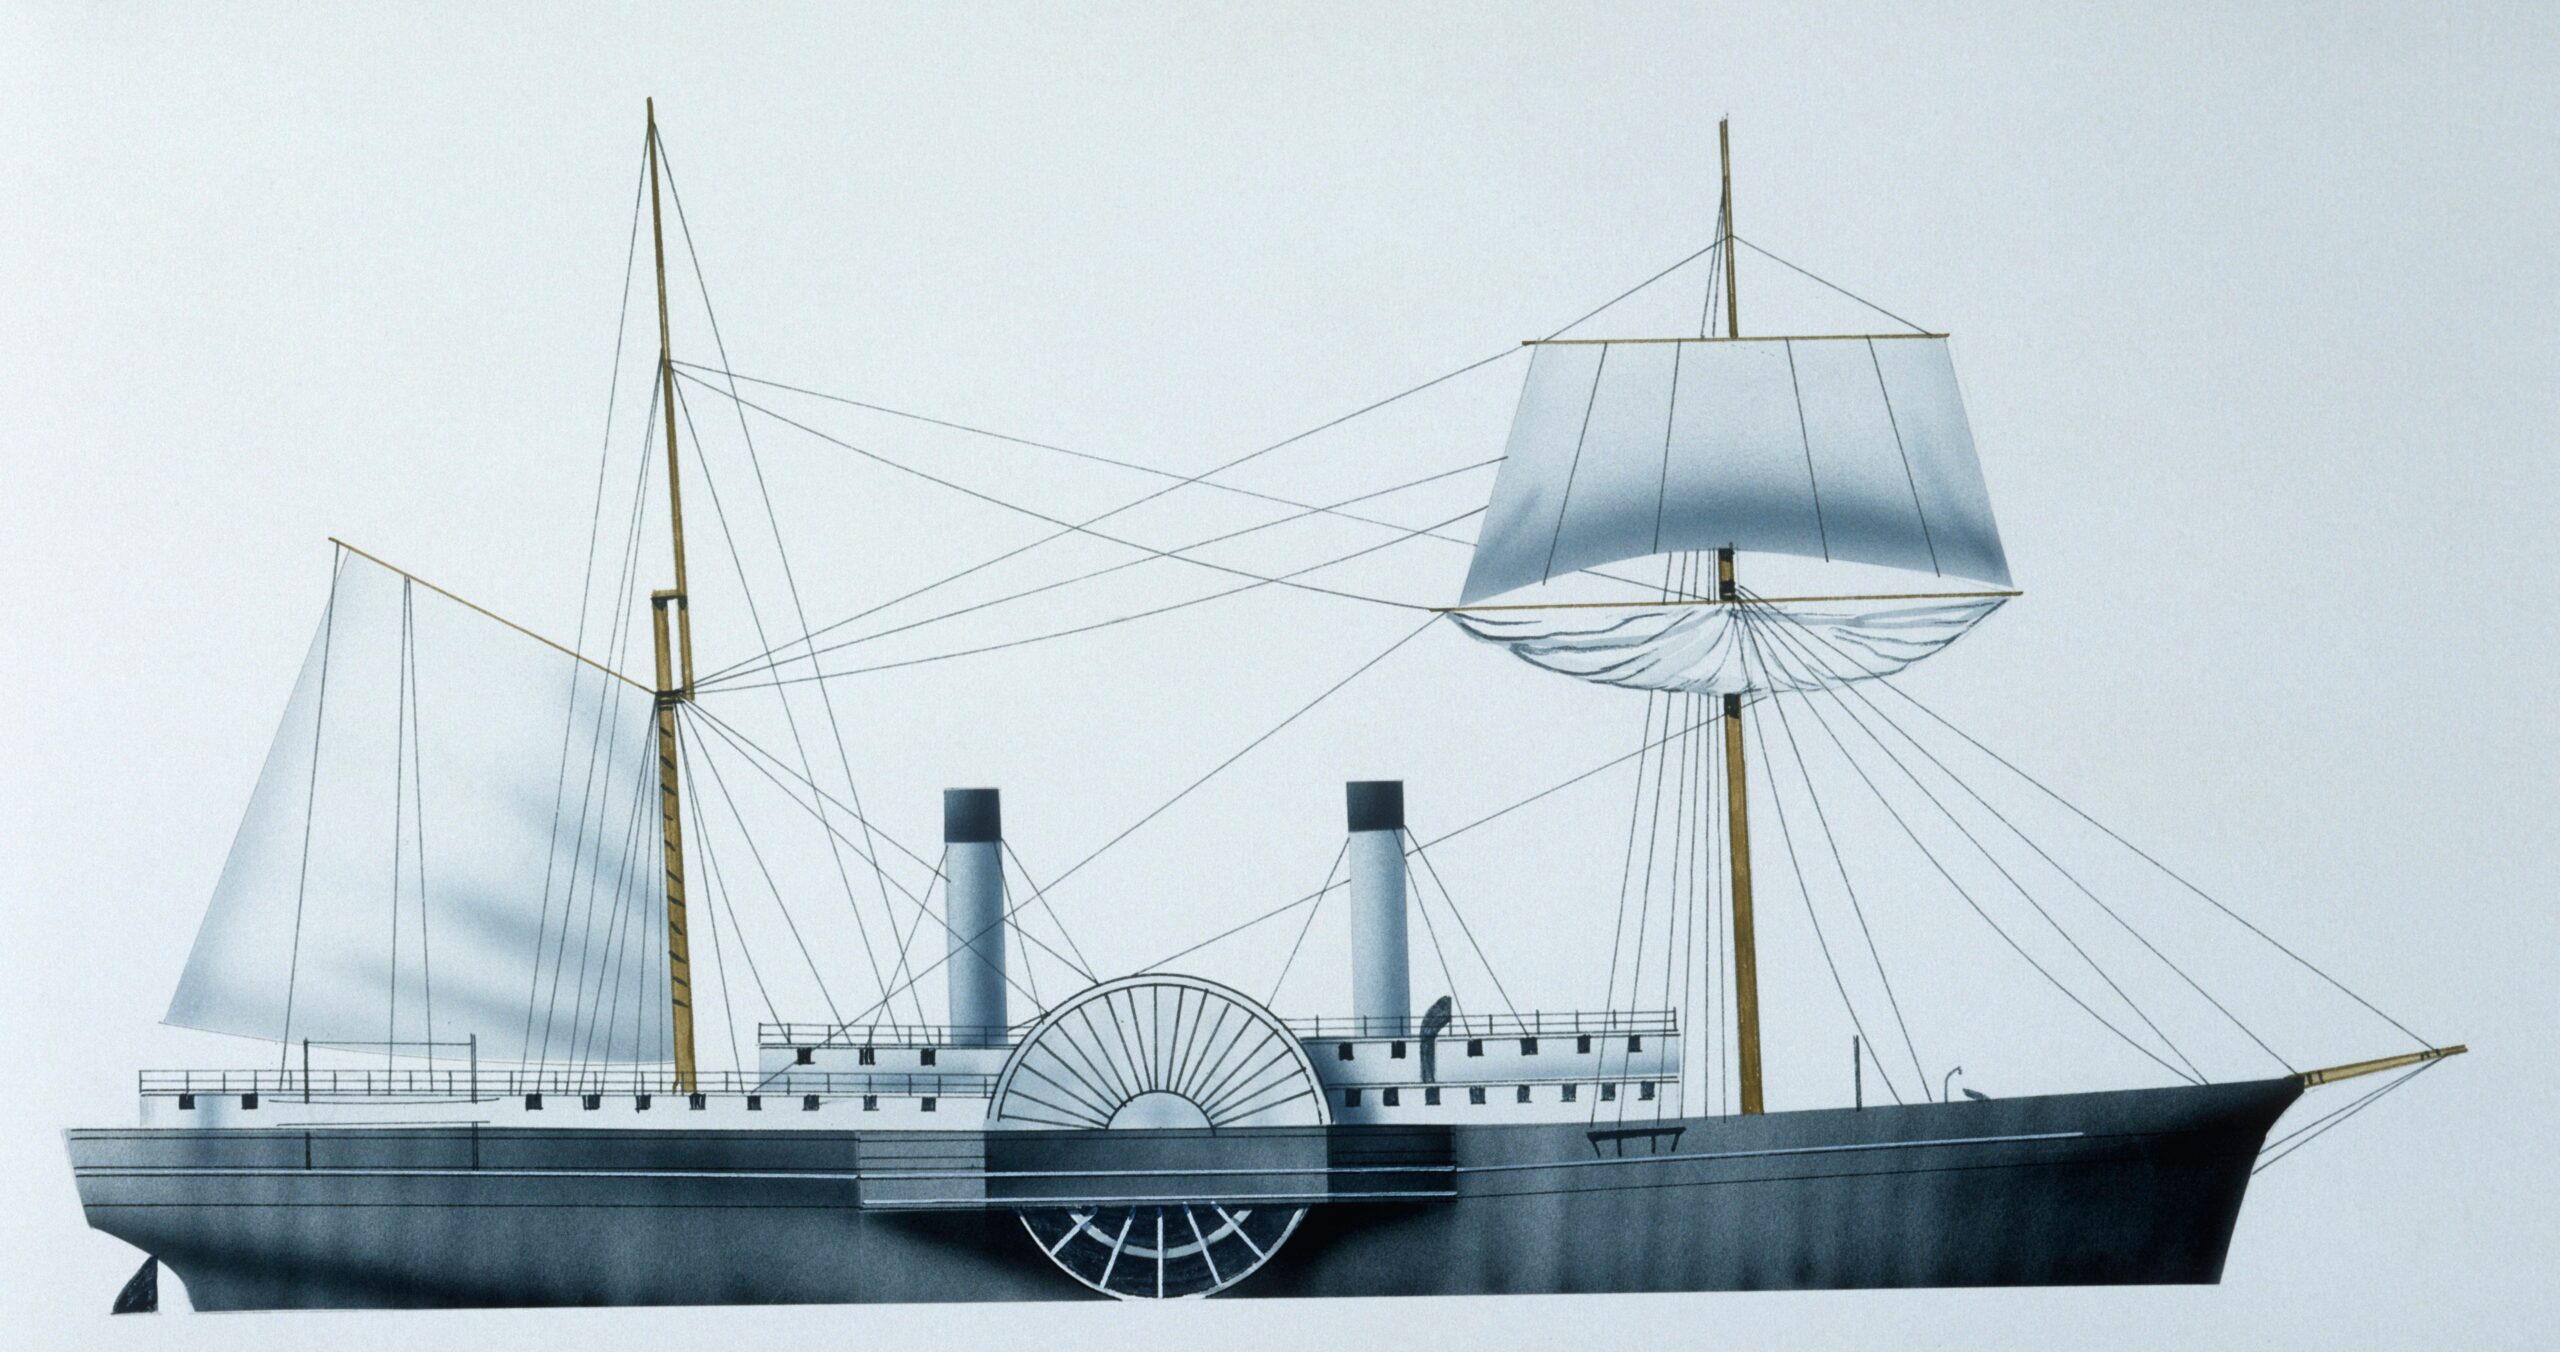 United States, Union Navy side wheel steamer USS Quaker City, 1854, color illustration.